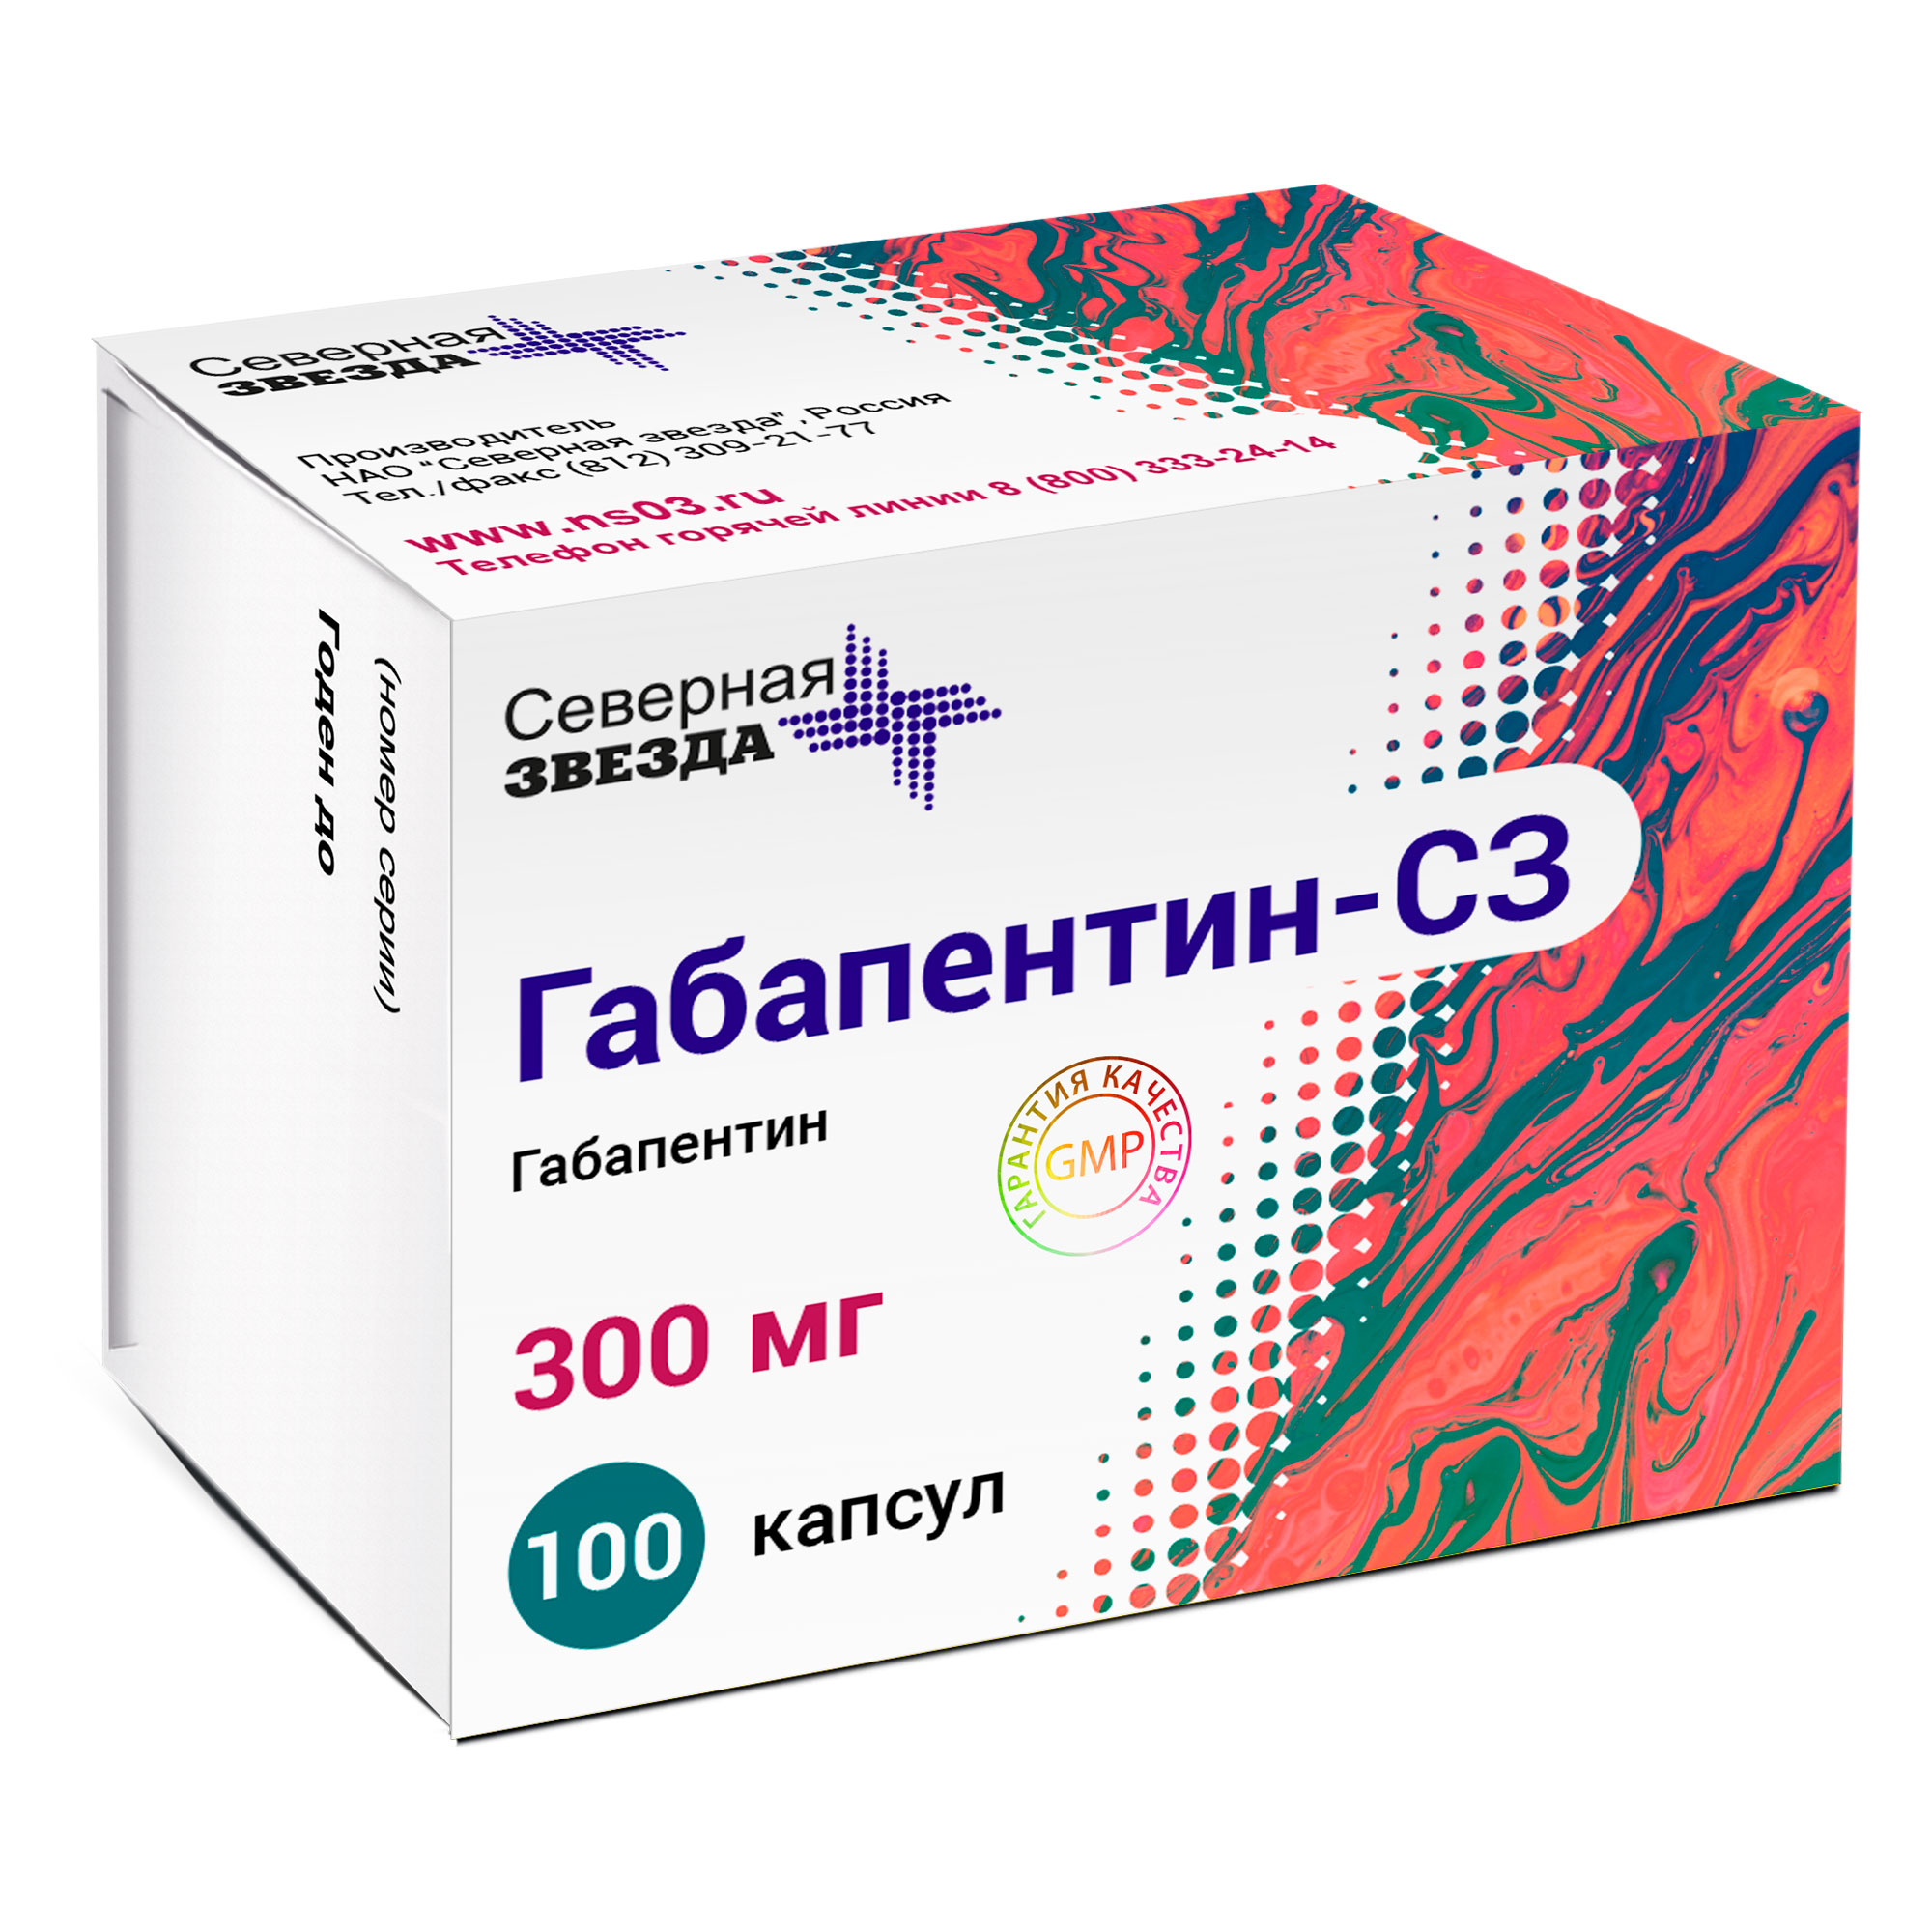 Габапентин-СЗ капсулы 300 мг 100 шт.